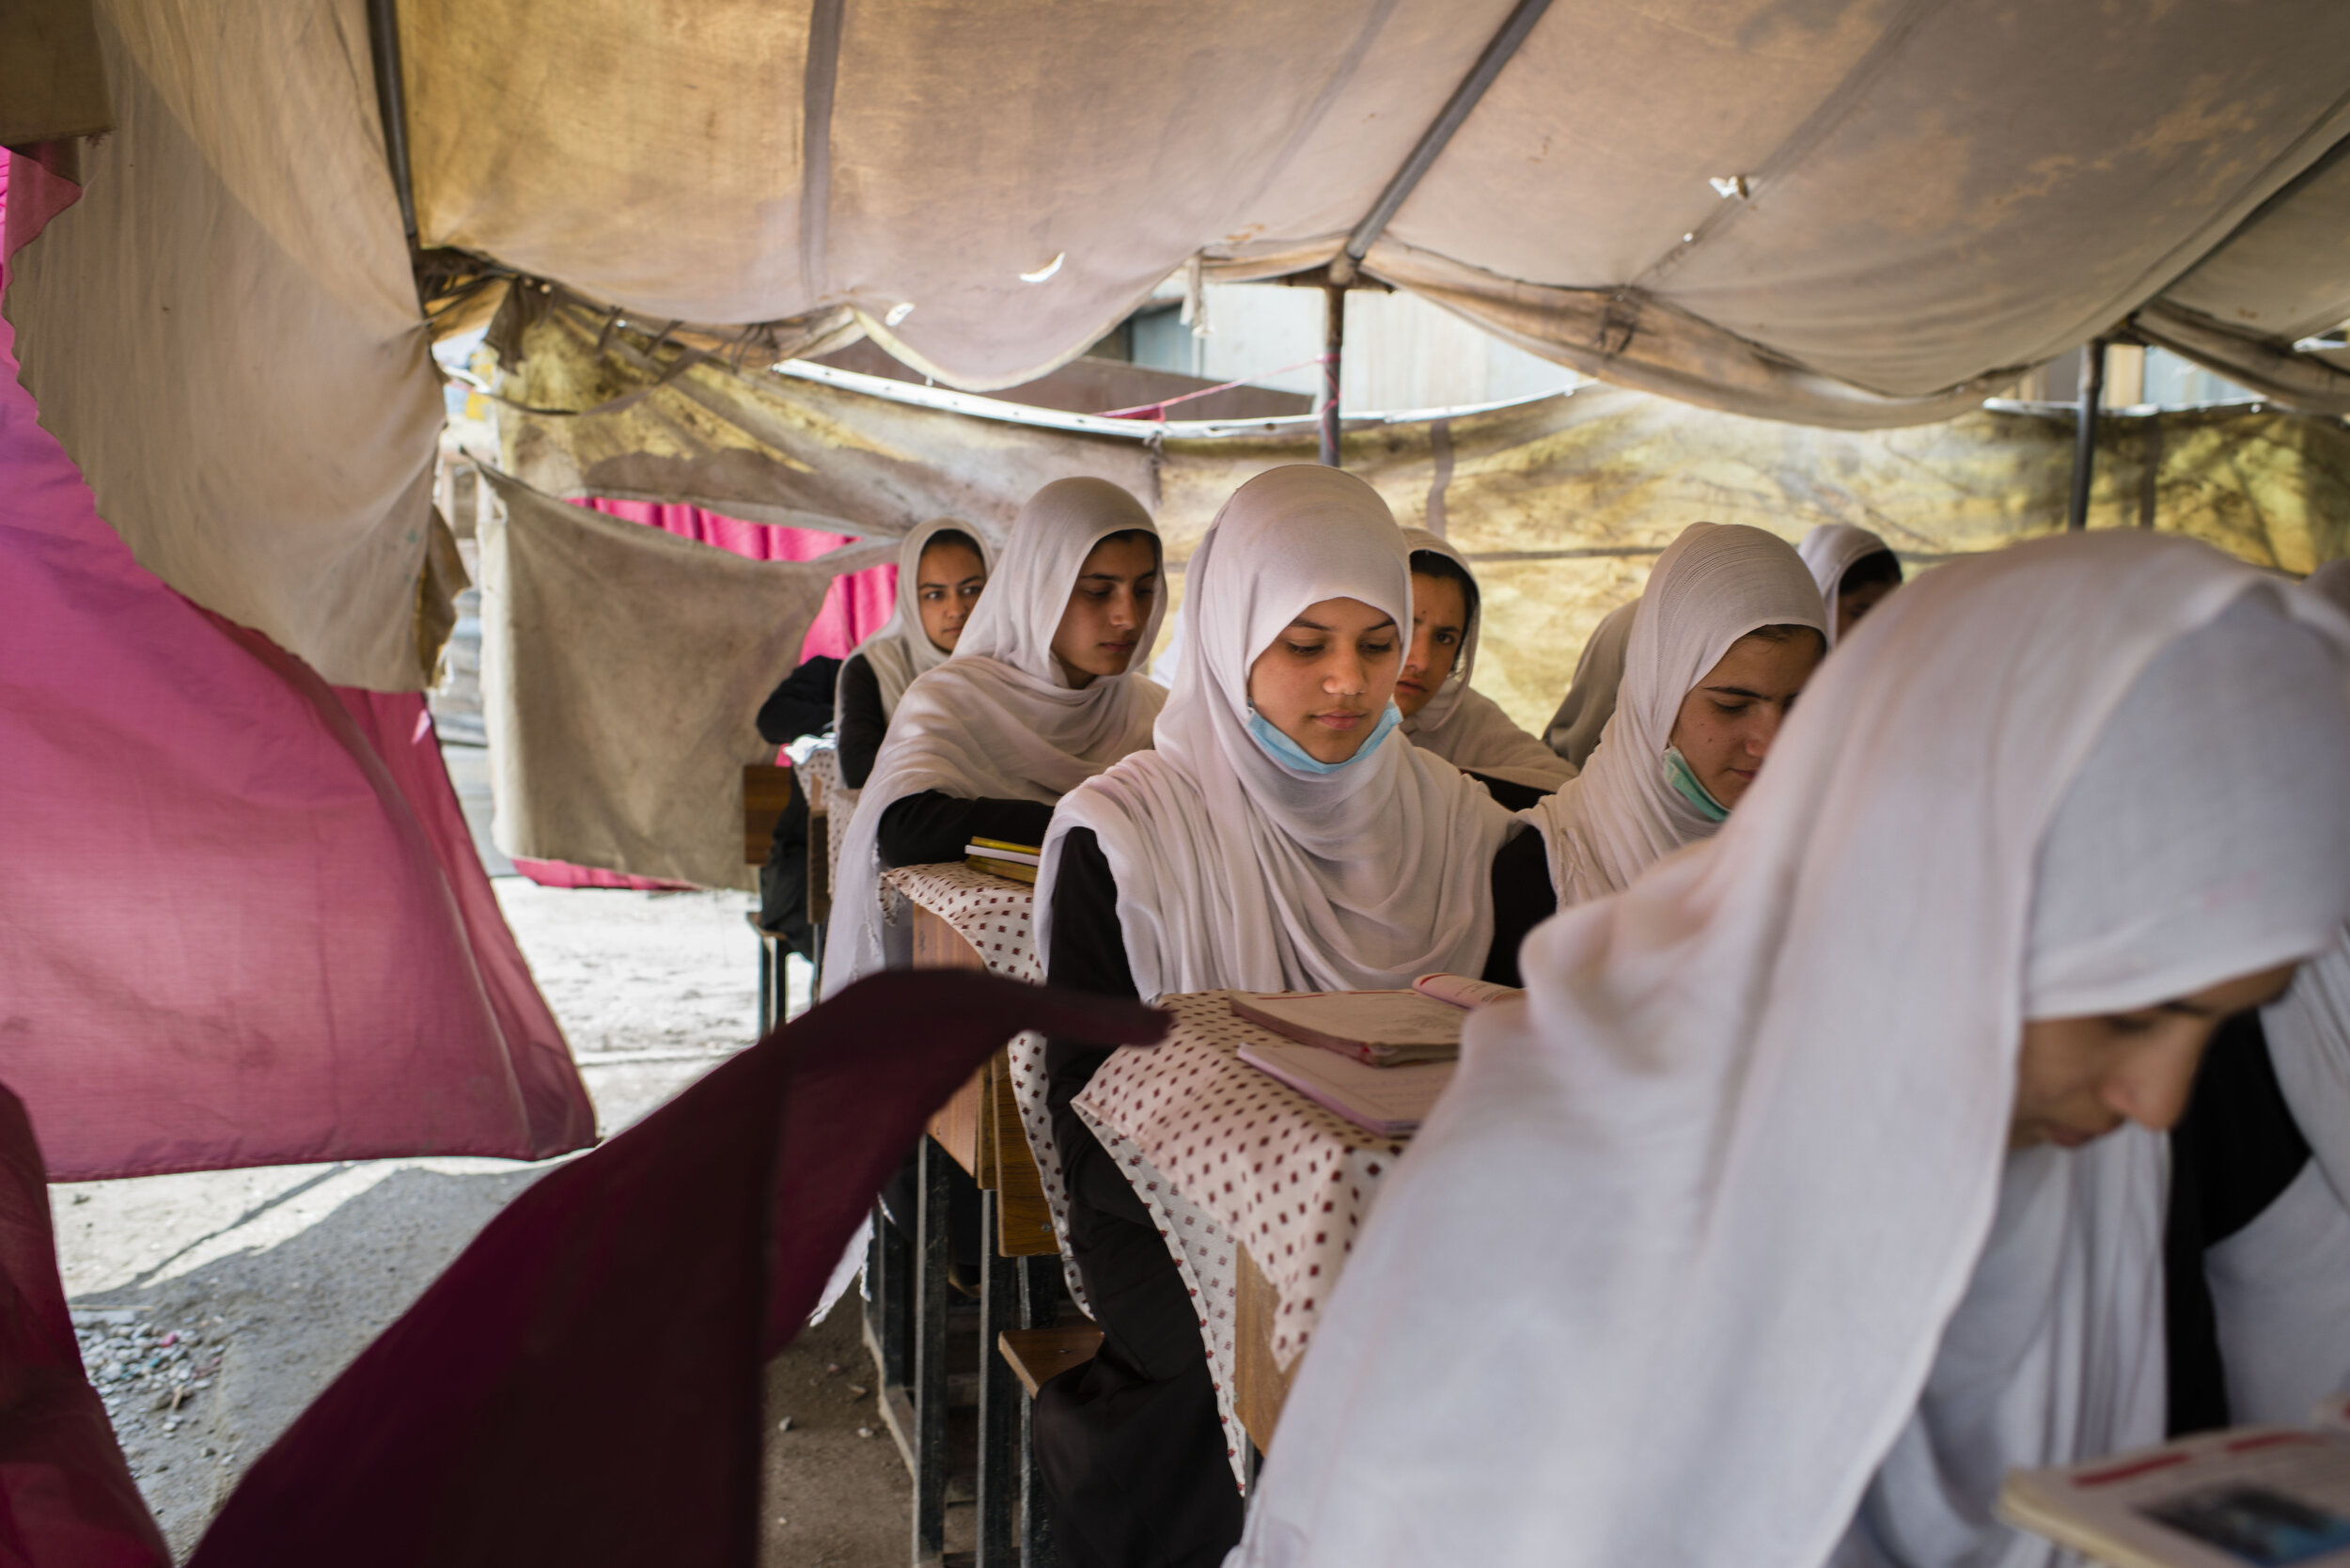  Students attend an all-girls school located in Kabul, Afghanistan (2015).  © Kiana Hayeri  